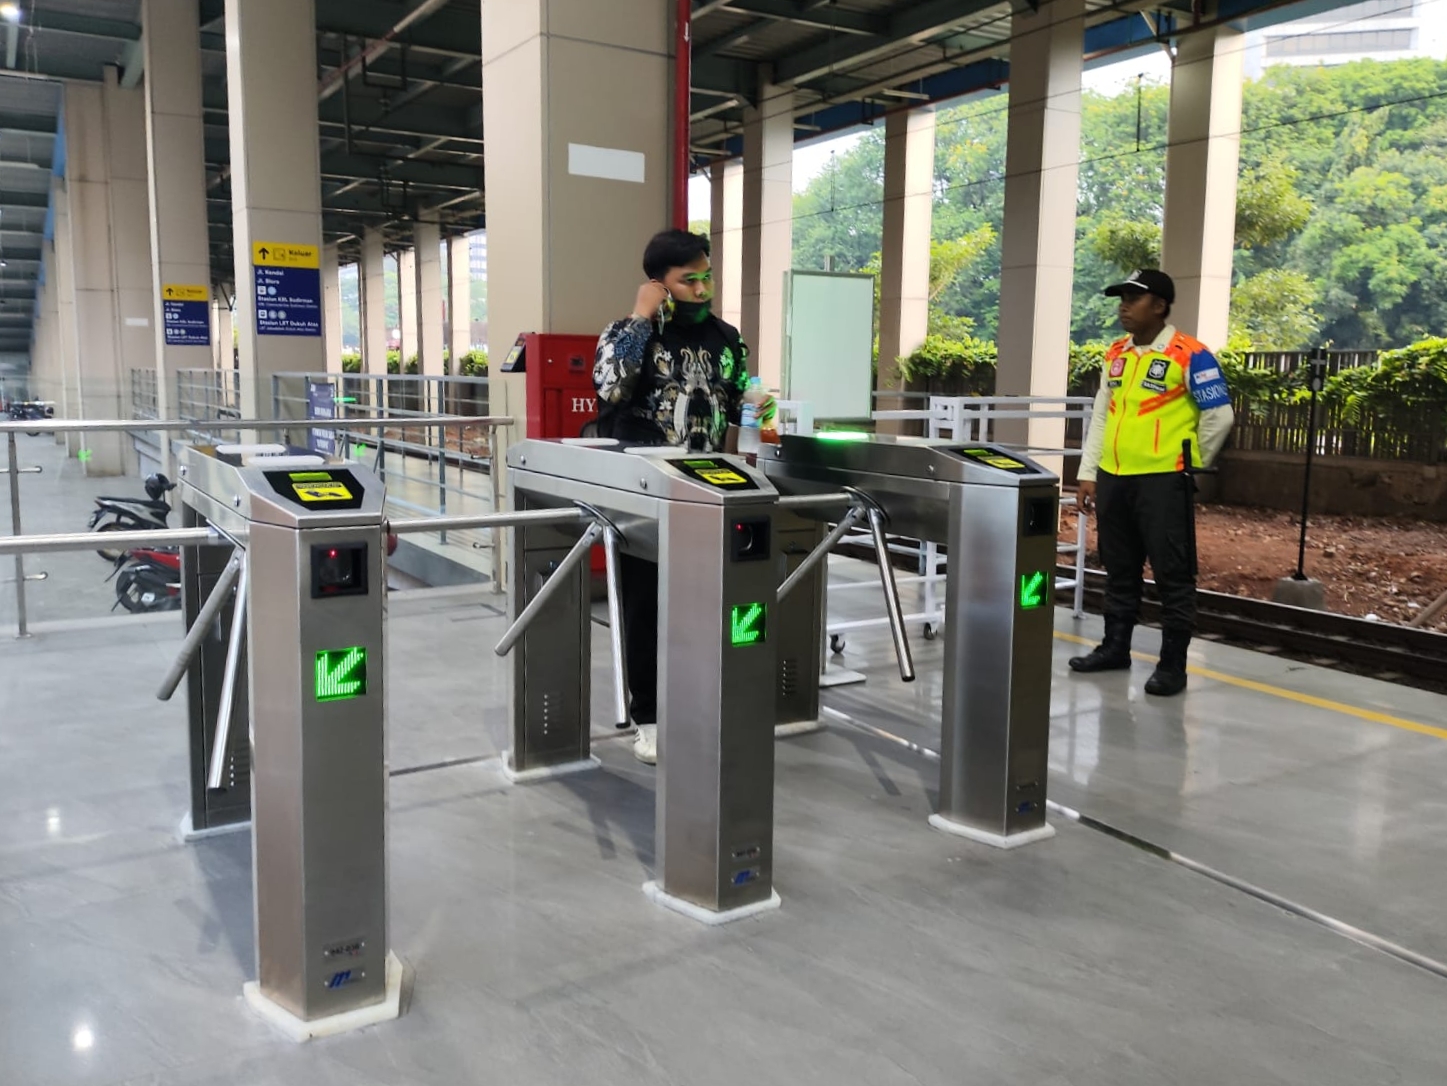 Permudah Akses Keluar Masuk Penumpang, KCI Tambah Tiga Gate di Stasiun BNI City